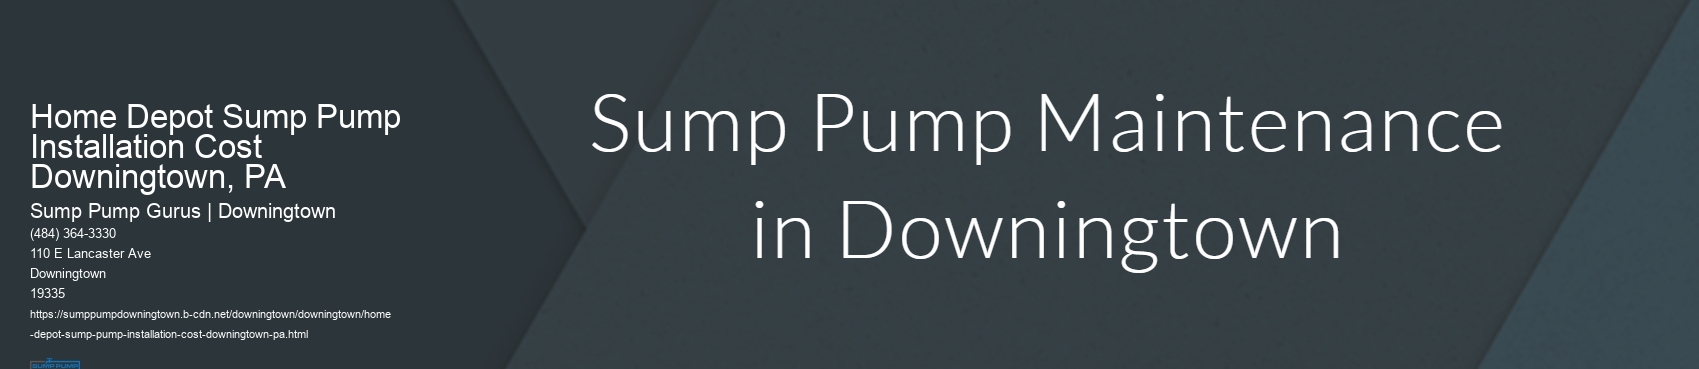 Home Depot Sump Pump Installation Cost Downingtown, PA